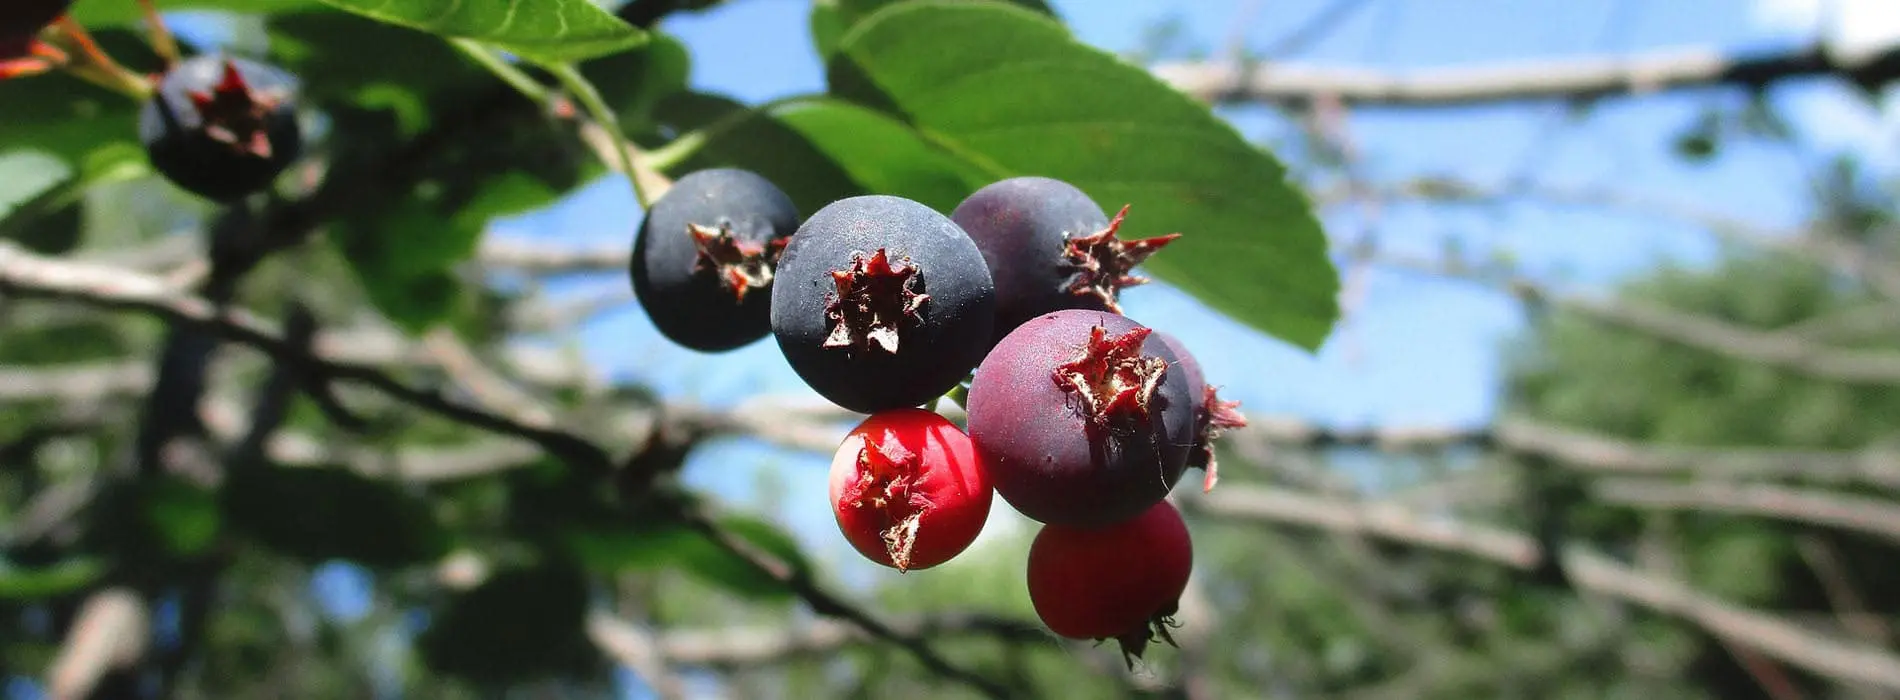 Saskatoon Berries for local restaurants & grocery stores